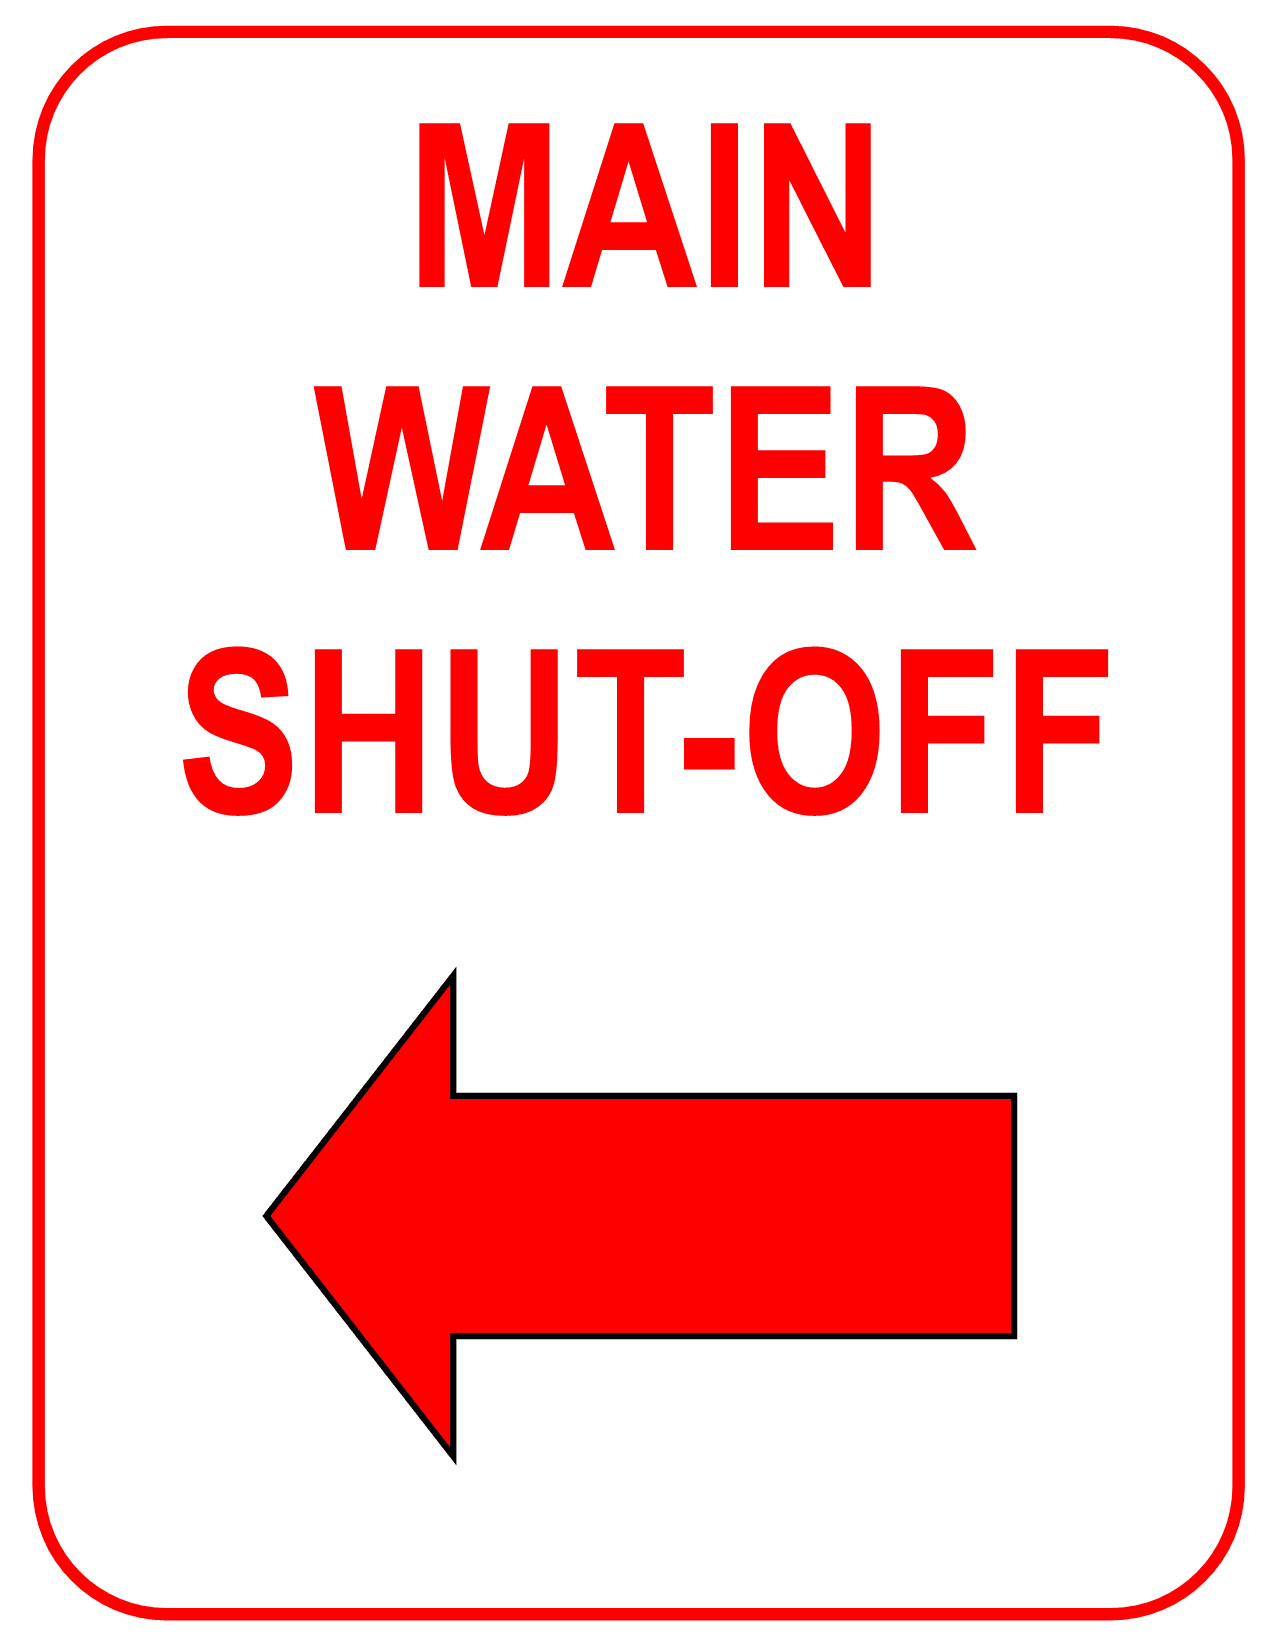 Video Tip On Water Main Shut Off